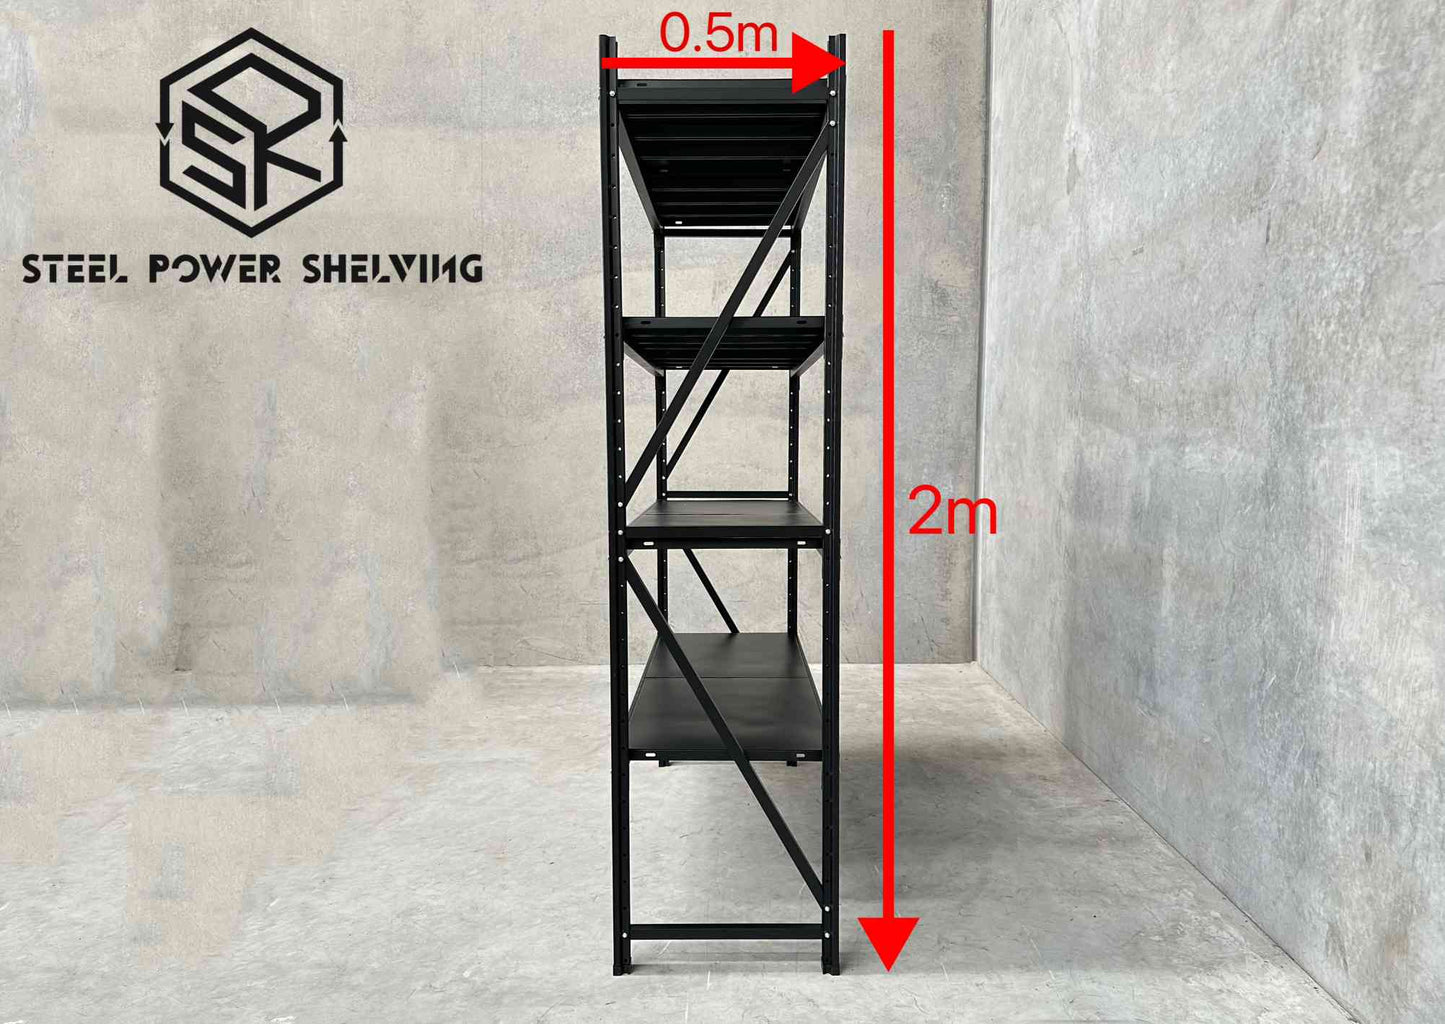 Shelf 2.0m(H)x1.2m(L)x0.5m(D)600kg